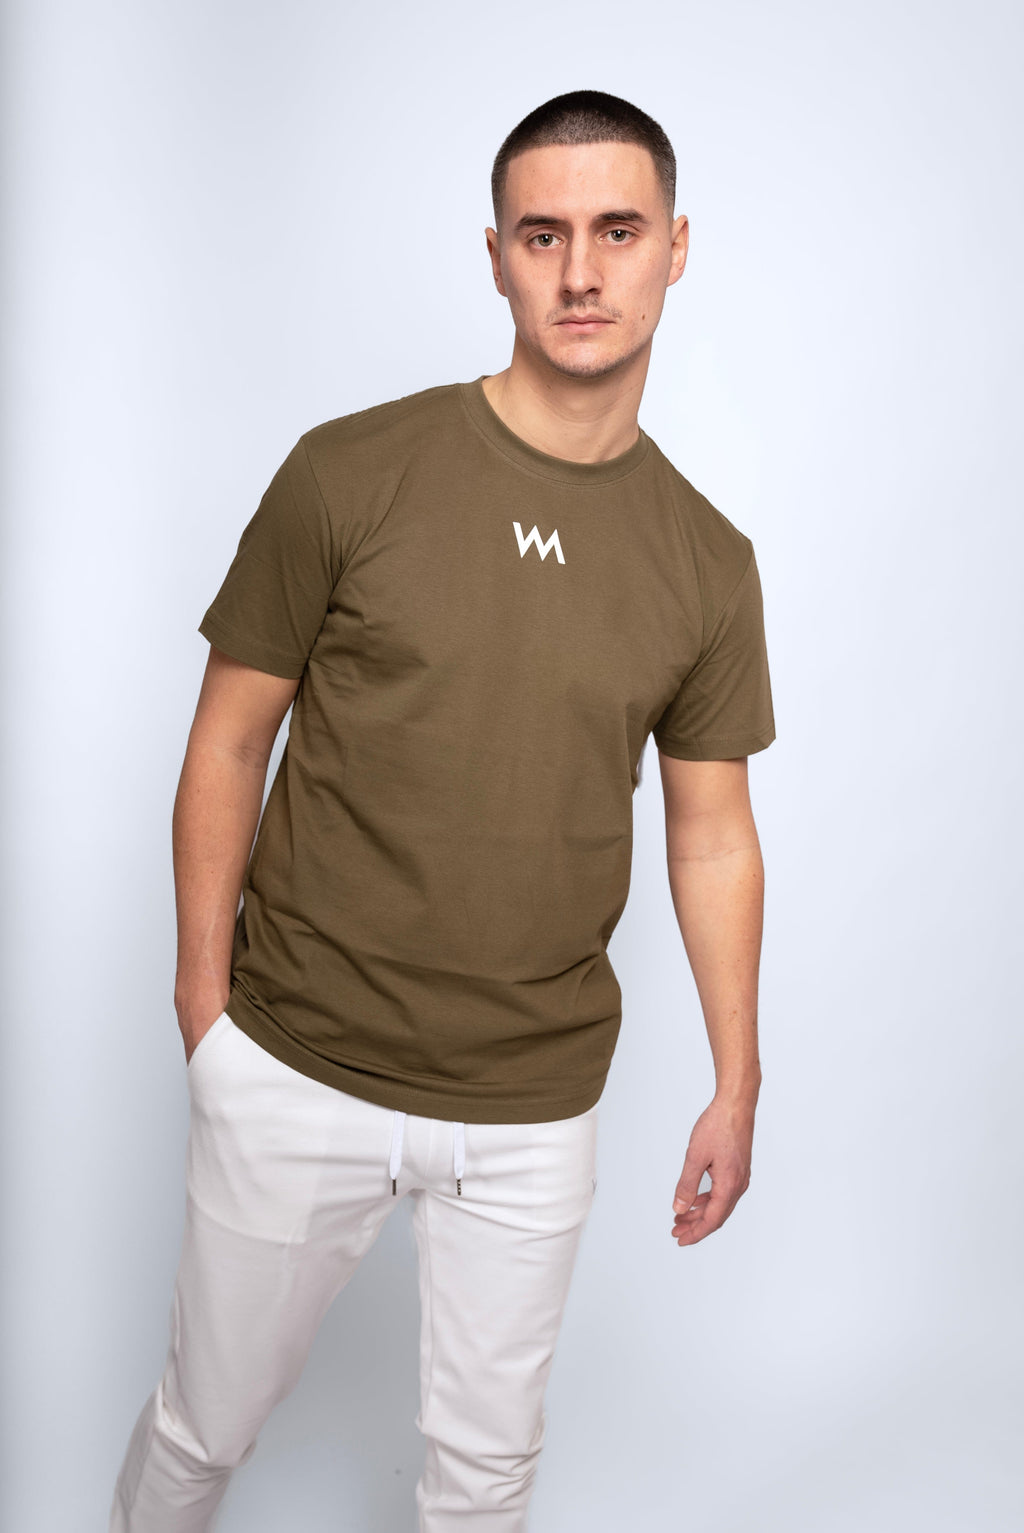 Wdmrck Exclusive t-shirt T-SHIRT (UNISEX) - KHAKI GREEN